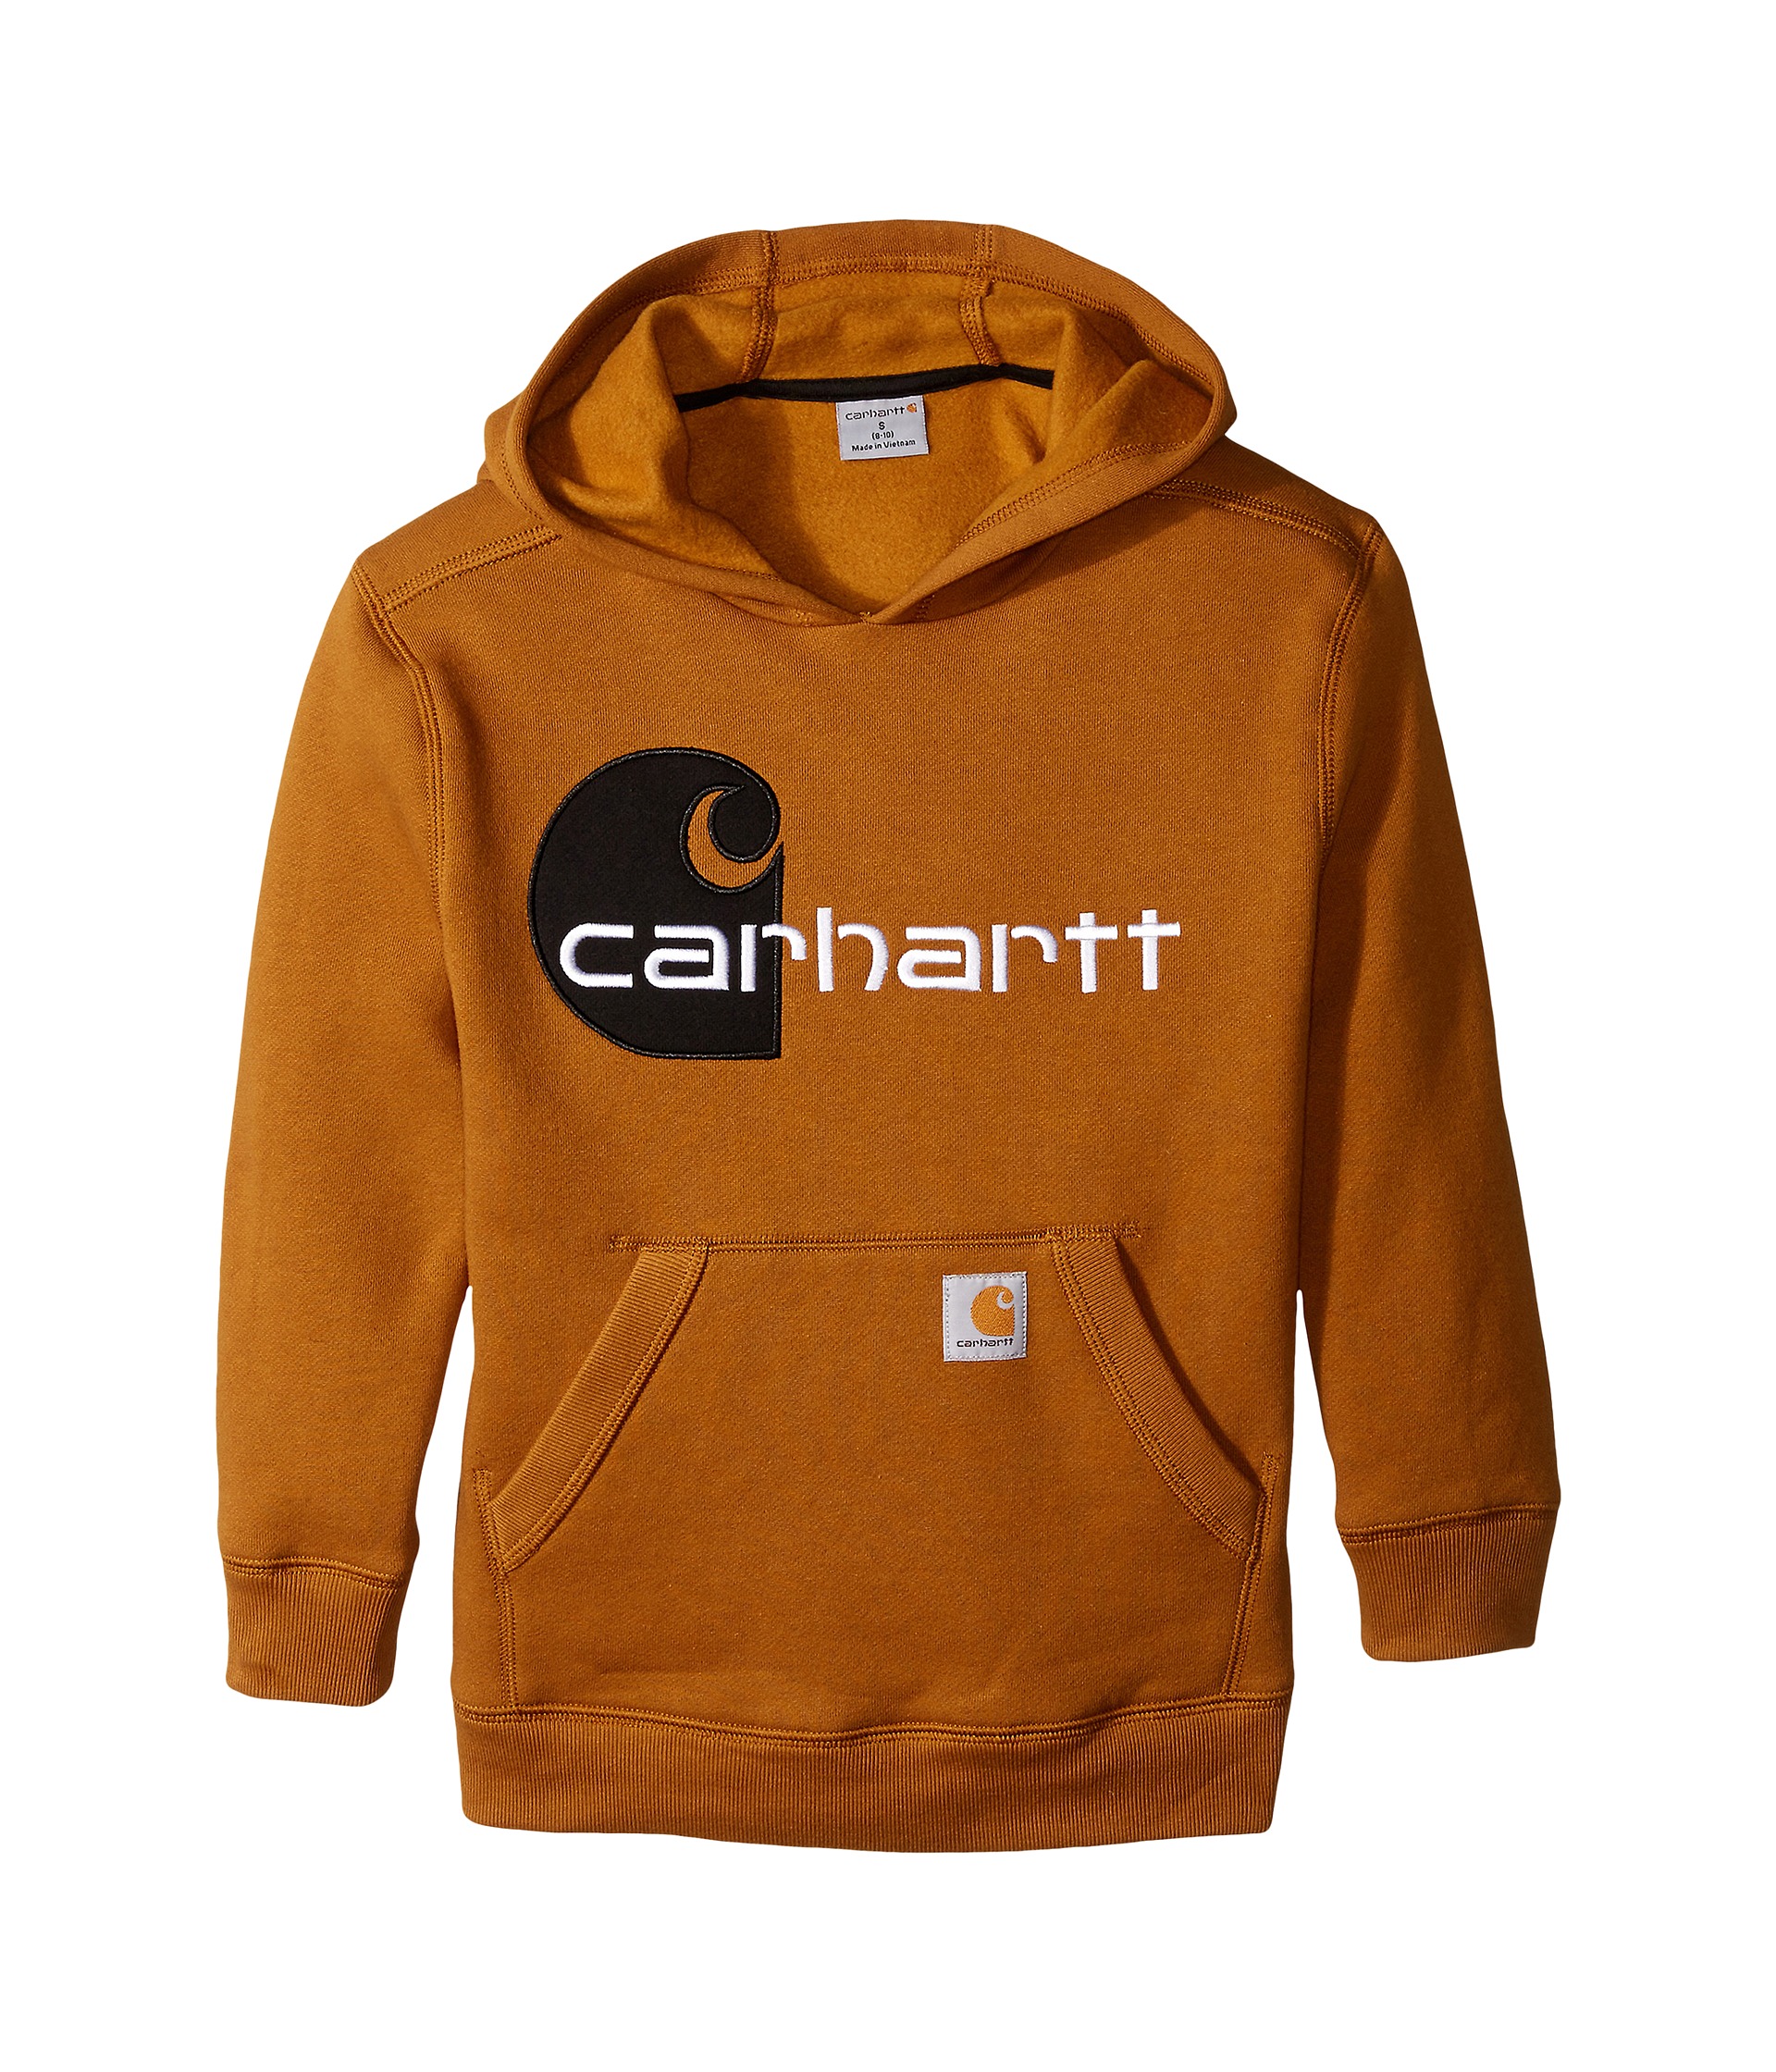 Carhartt Kids Carhartt C Sweatshirt (Big Kids) - Zappos.com Free ...